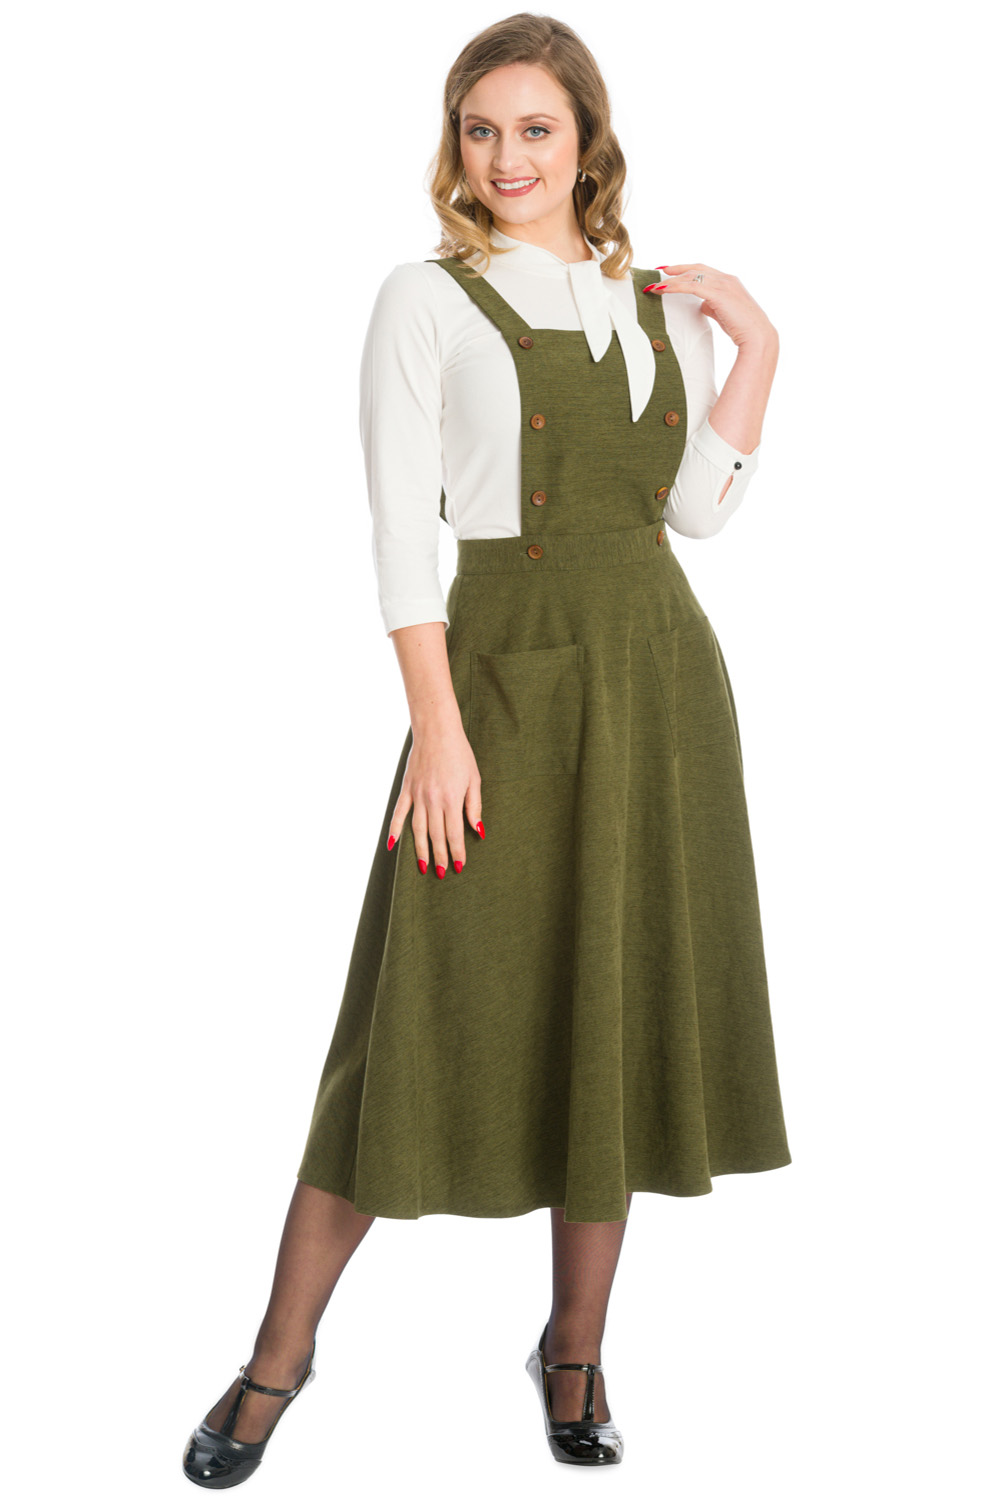 Banned Retro Lifes A Peach Green Pinafore 50s Dress Skirt